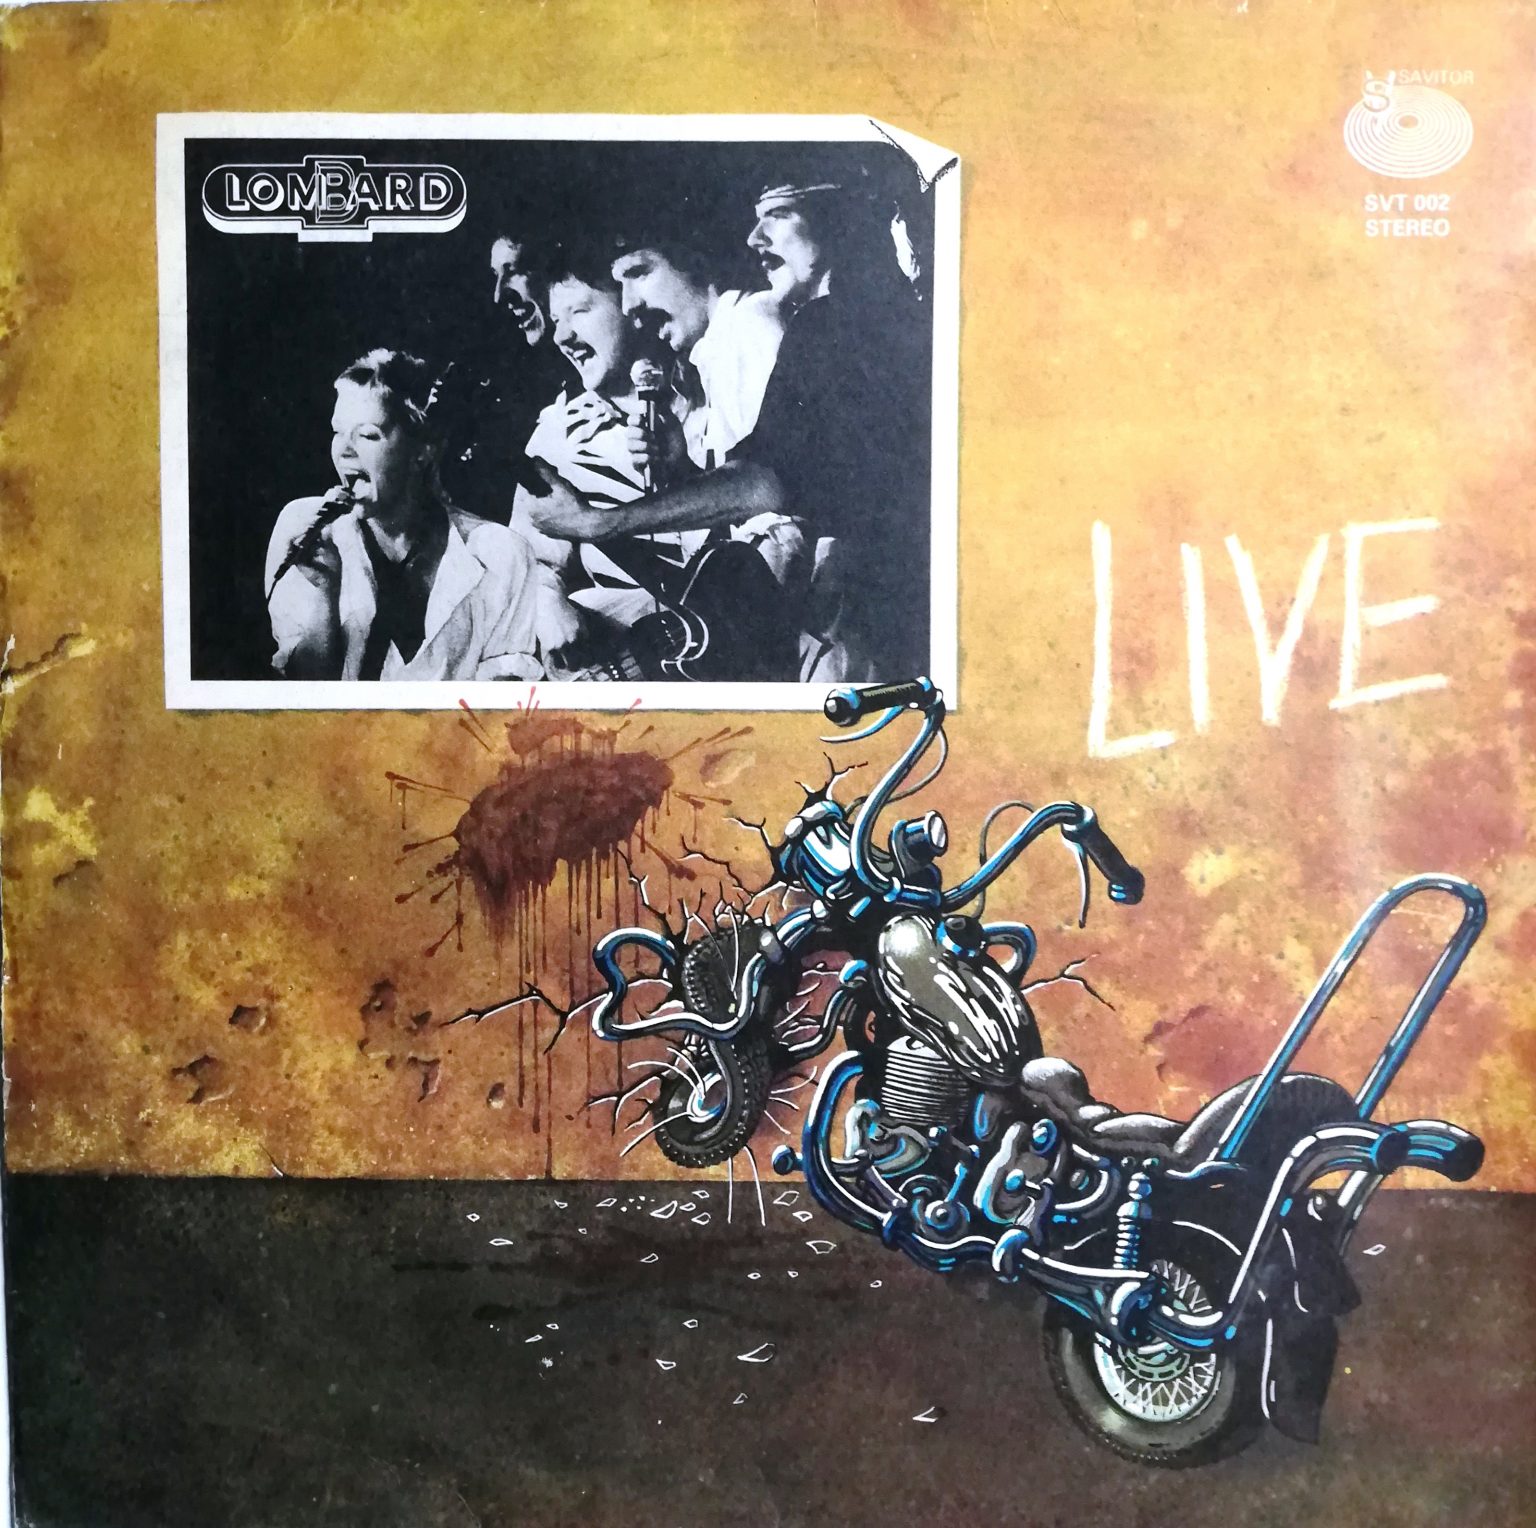 Lombard – Live [Vinyl LP] (VG/VG)